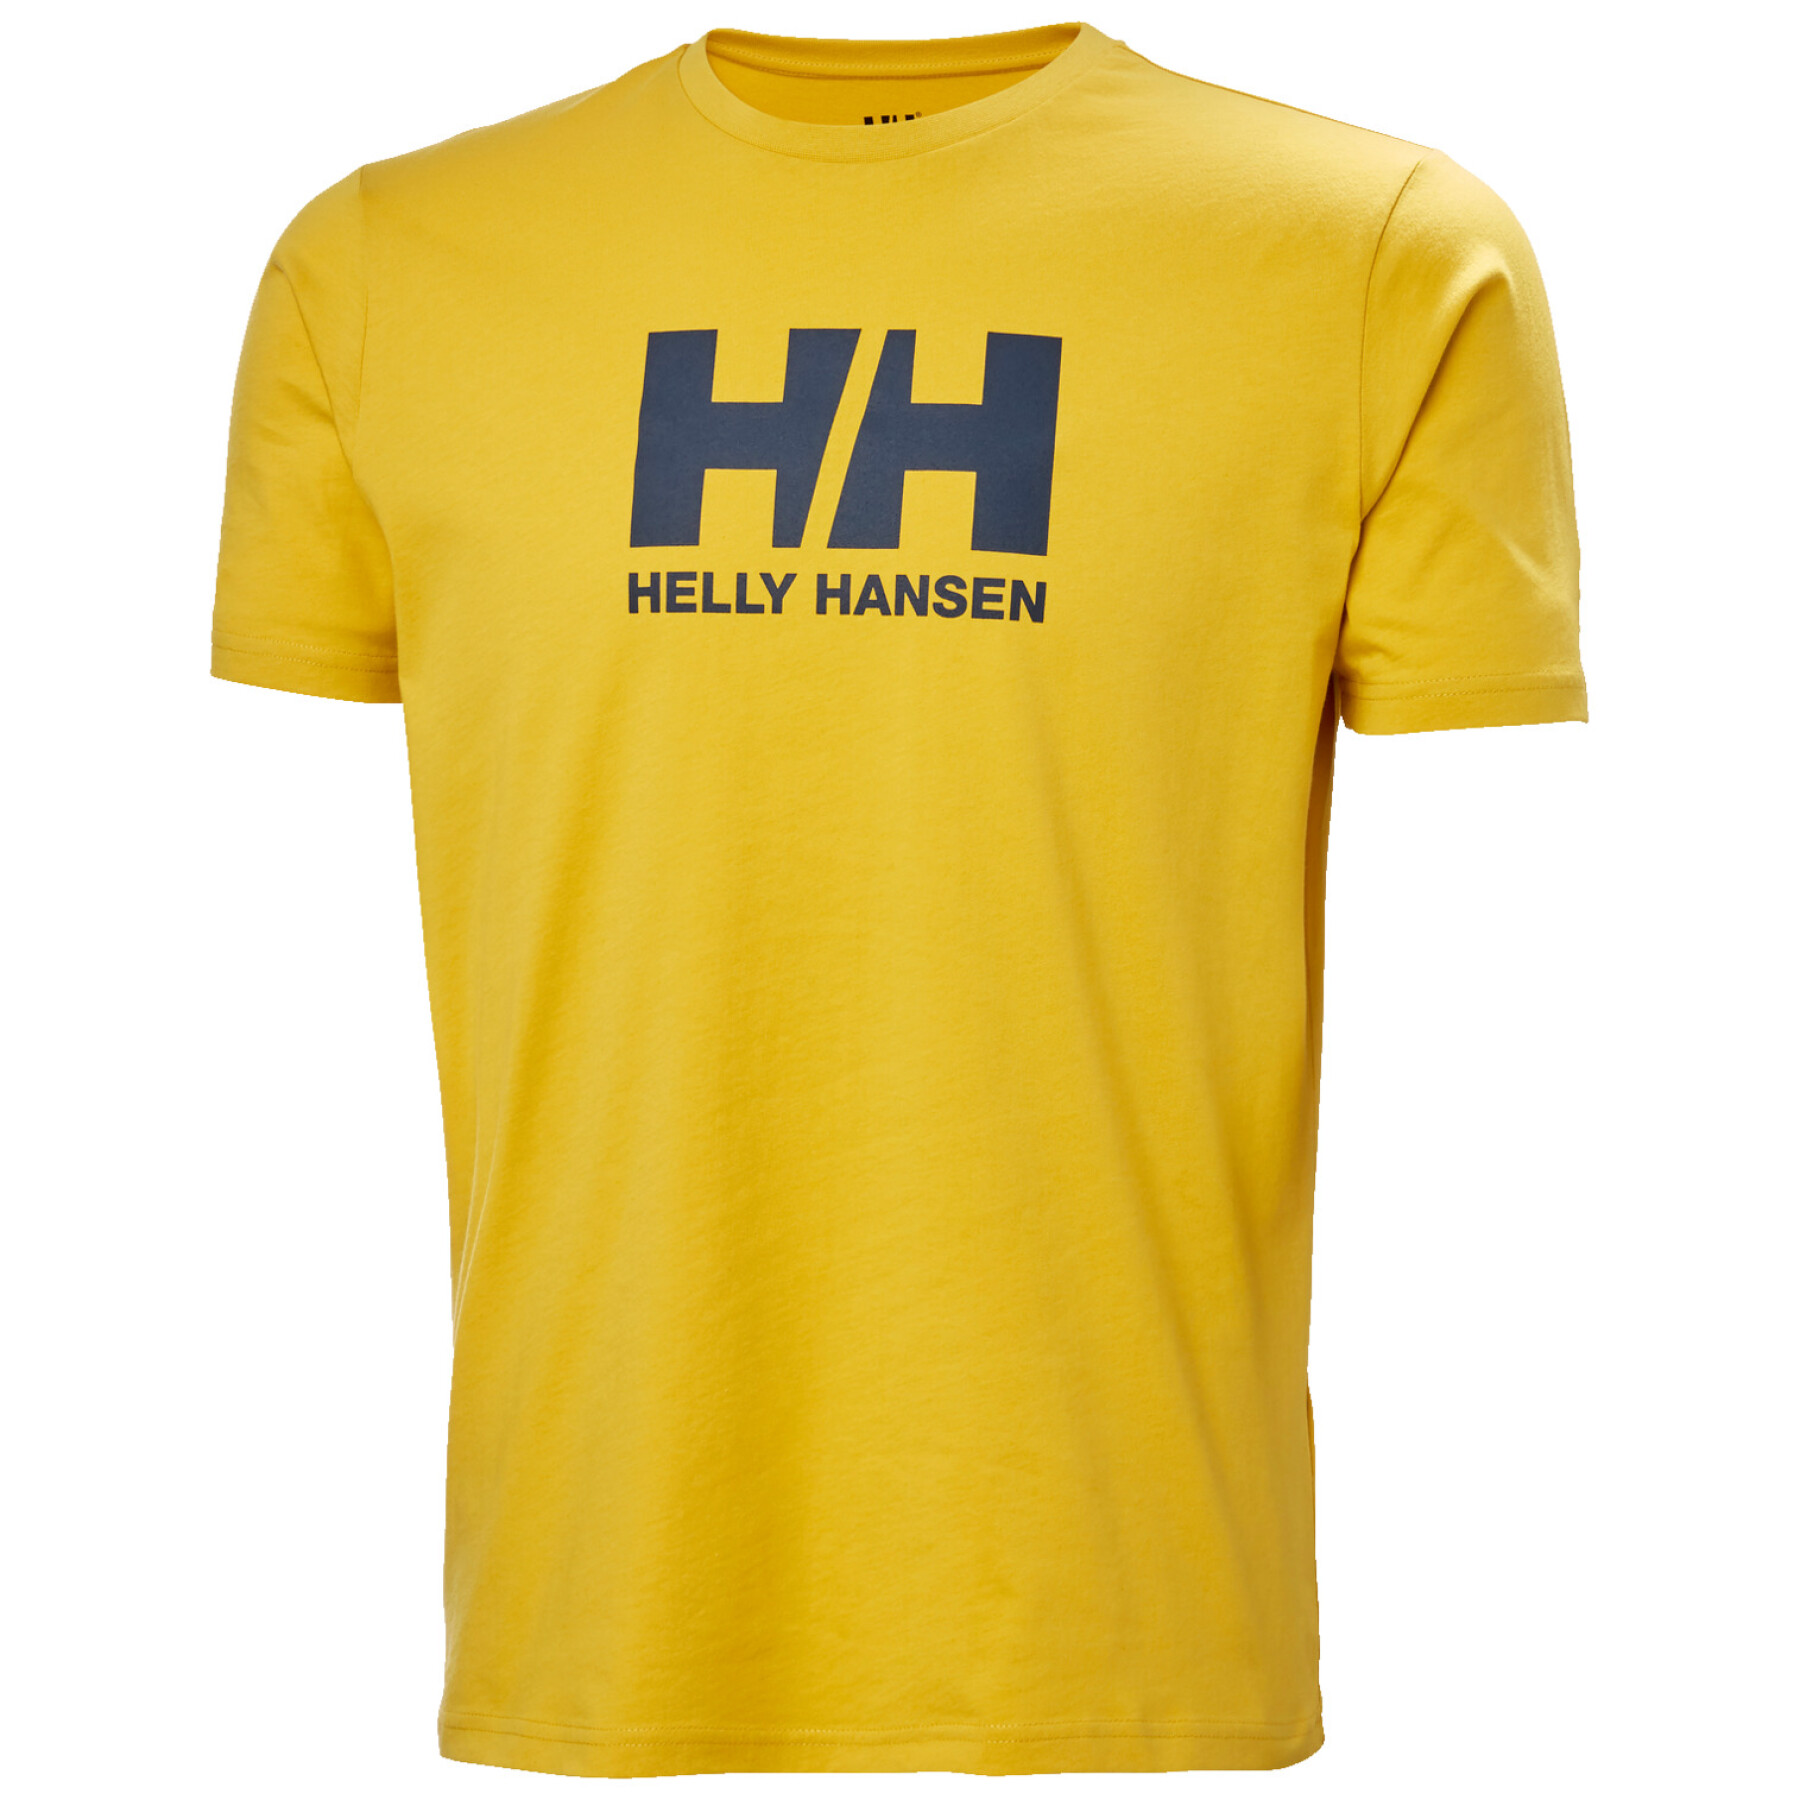 T-shirt met logo Helly Hansen